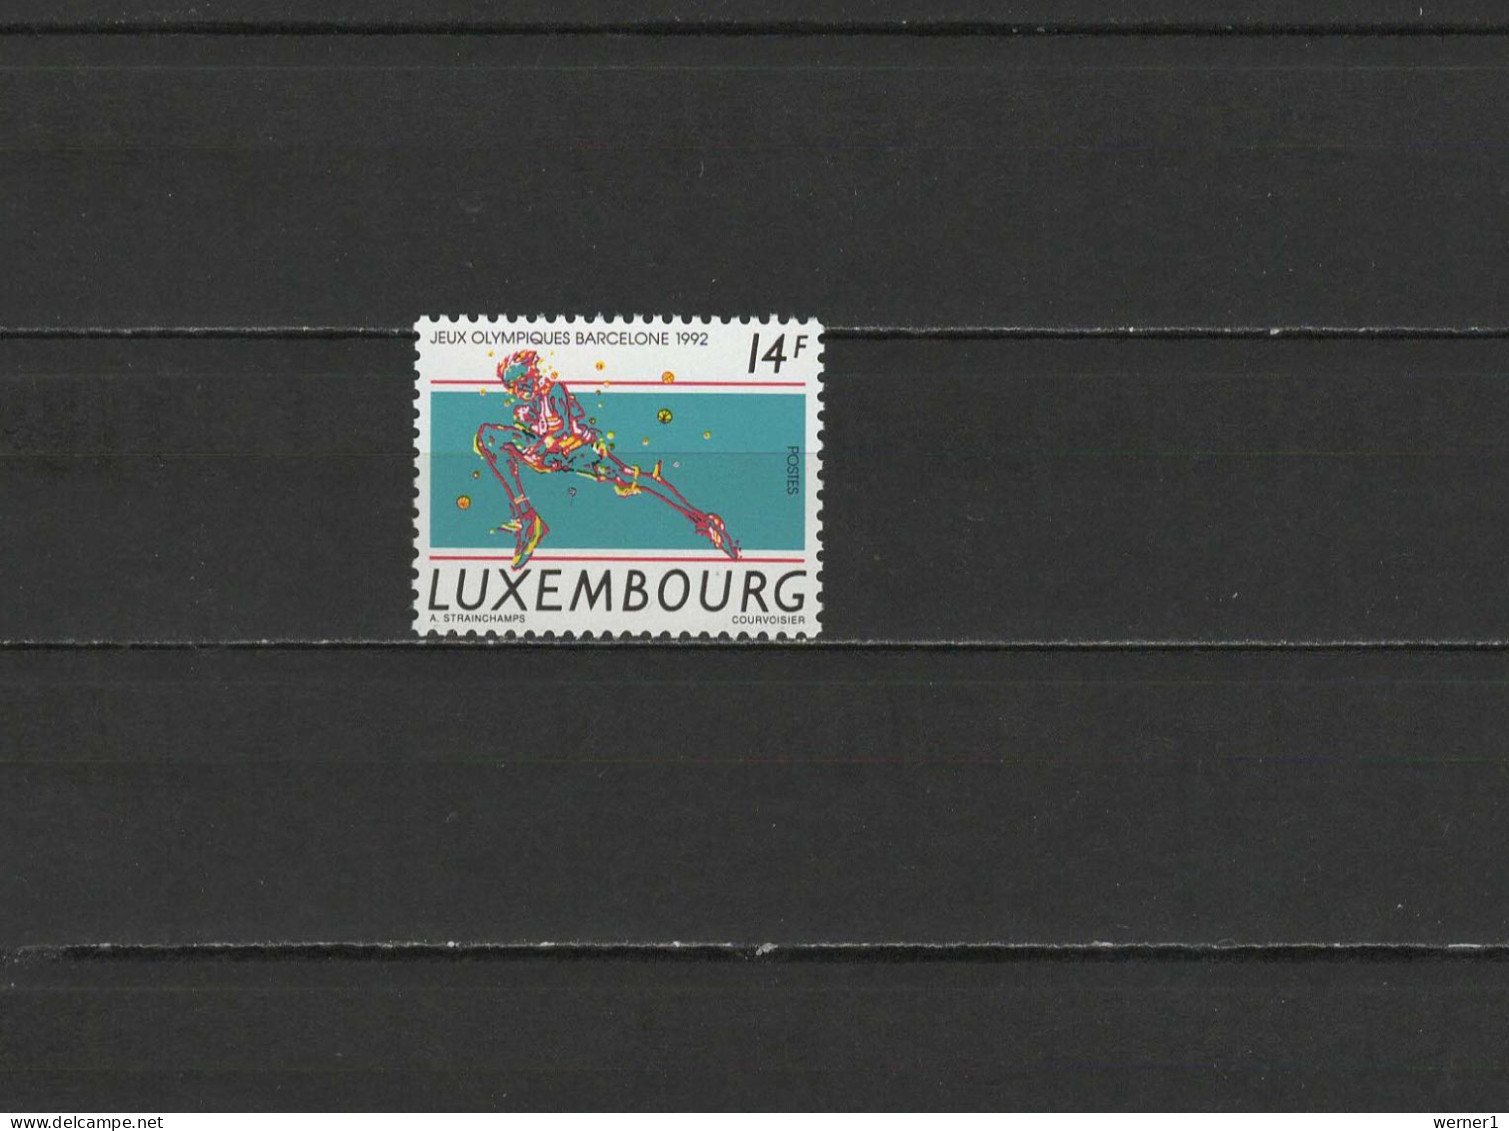 Luxemburg 1992 Olympic Games Barcelona Stamp MNH - Verano 1992: Barcelona